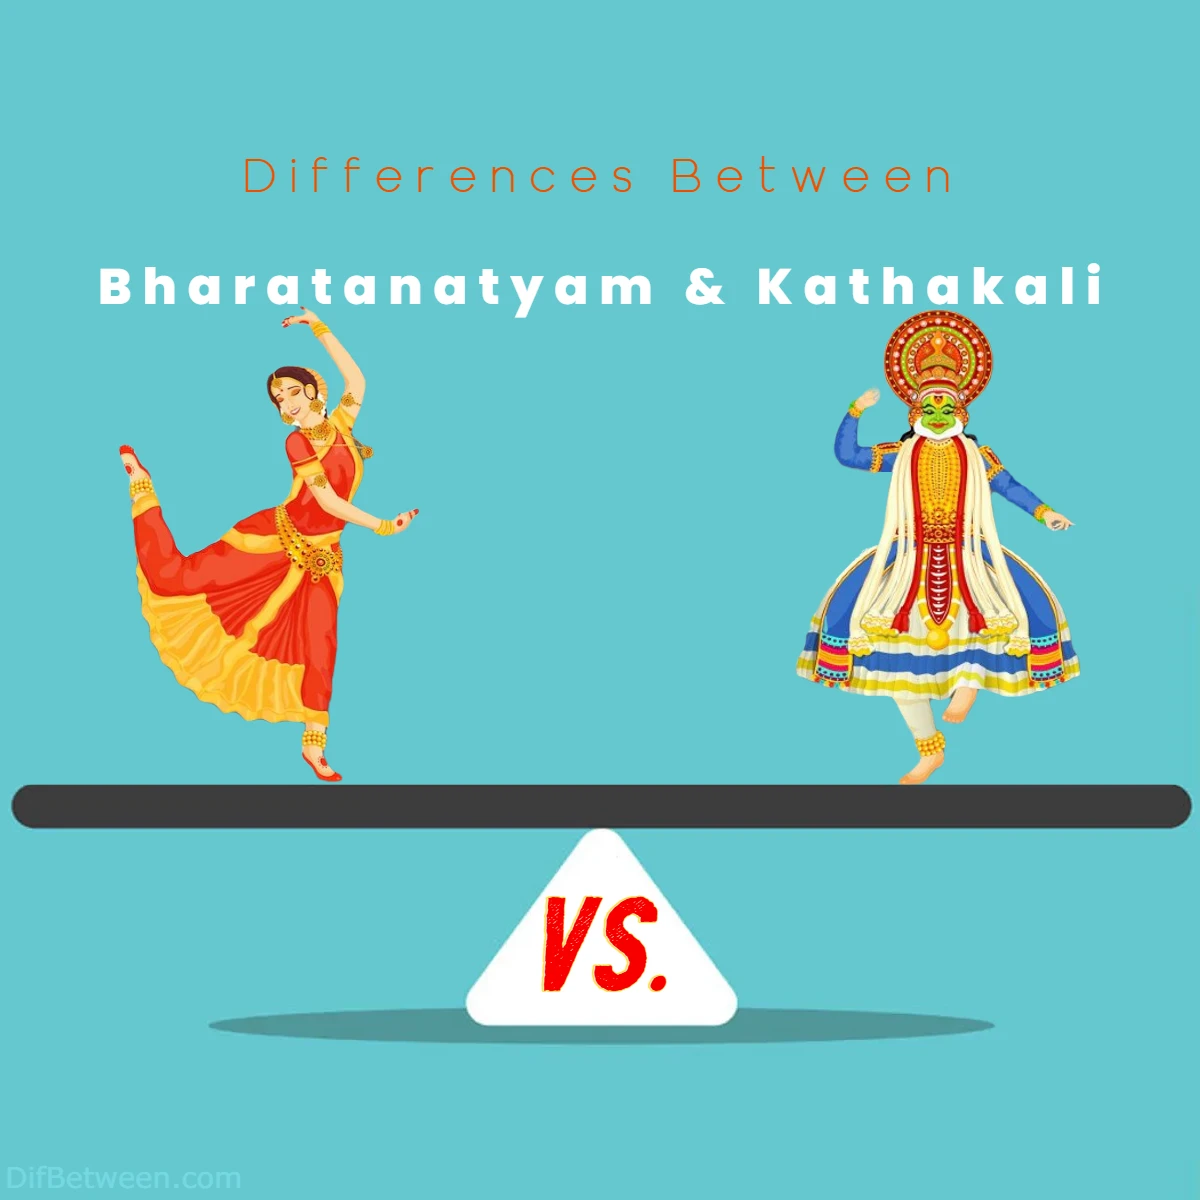 Differences Between Bharatanatyam vs Kathakali